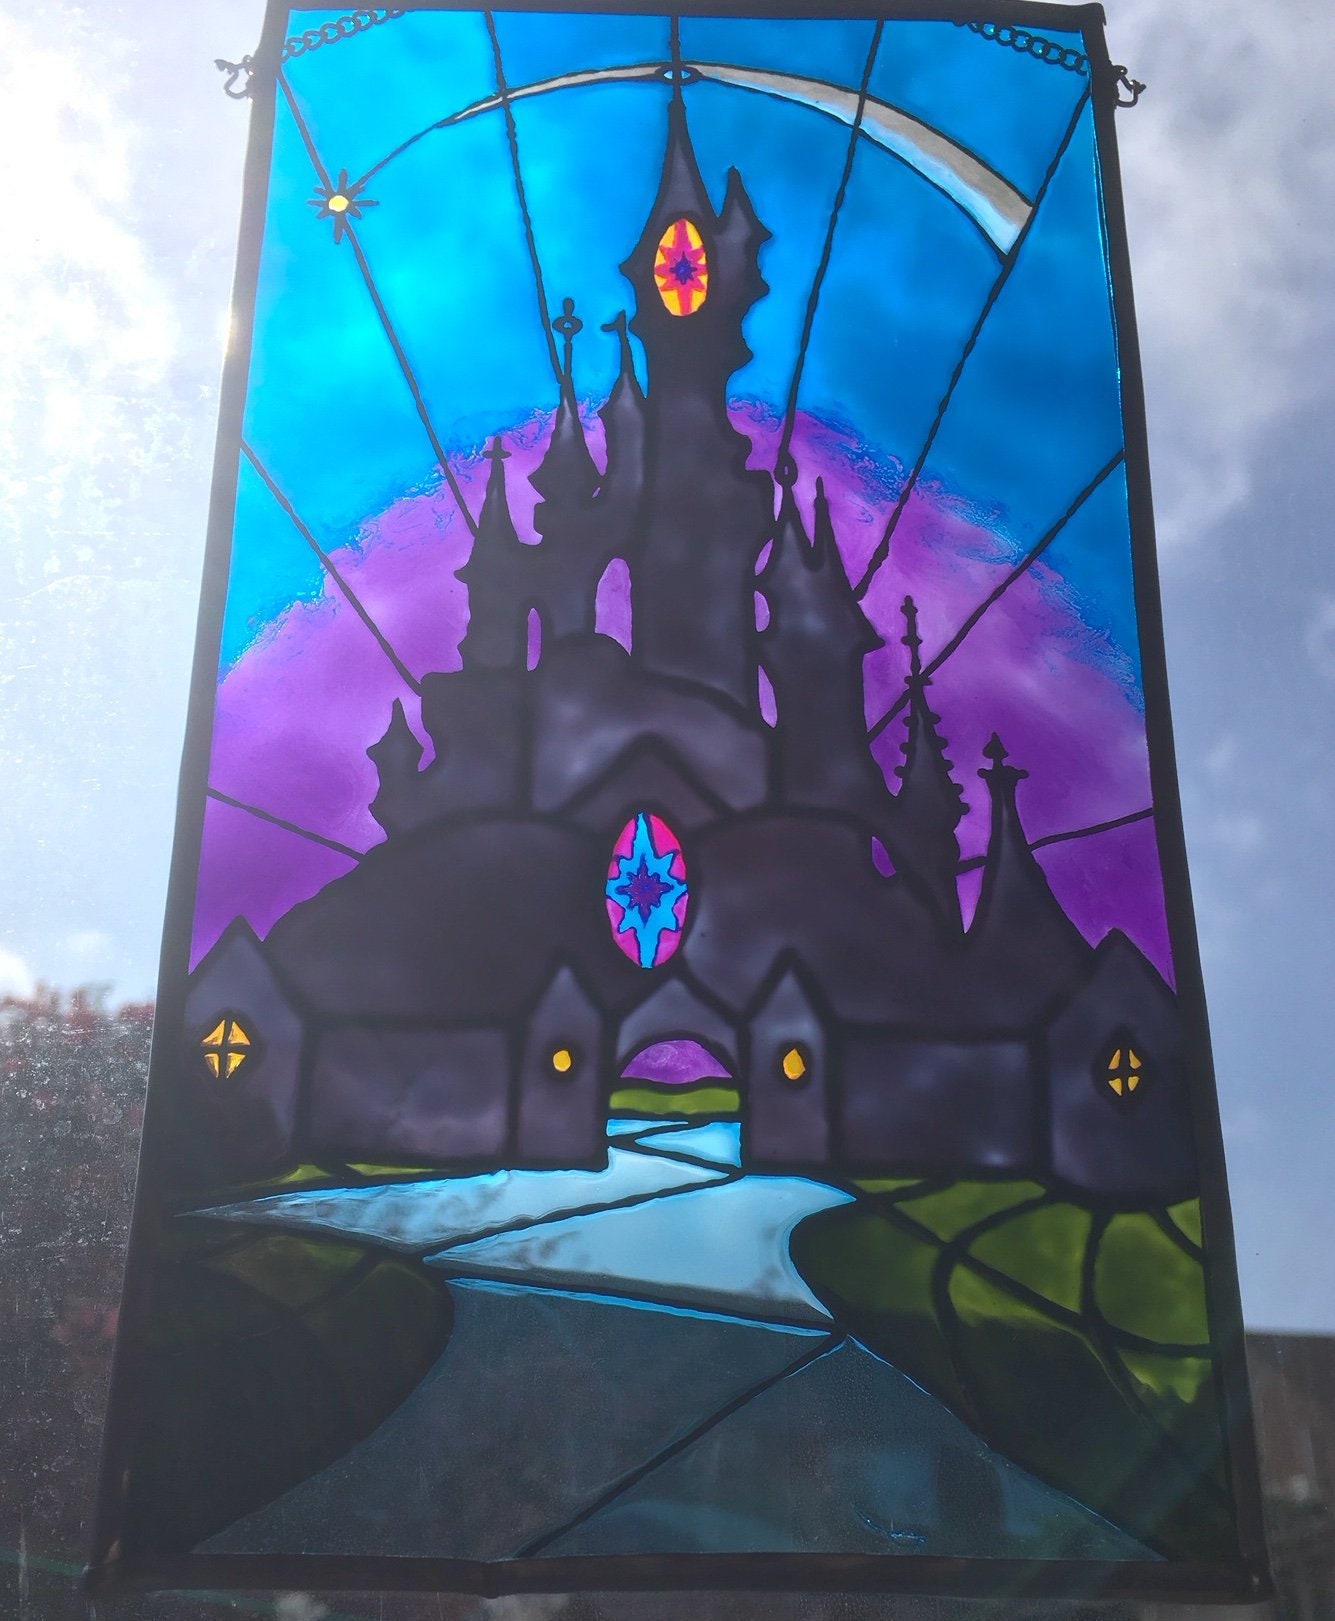 Sleeping Beauty Stained Glass, Disneyland Paris